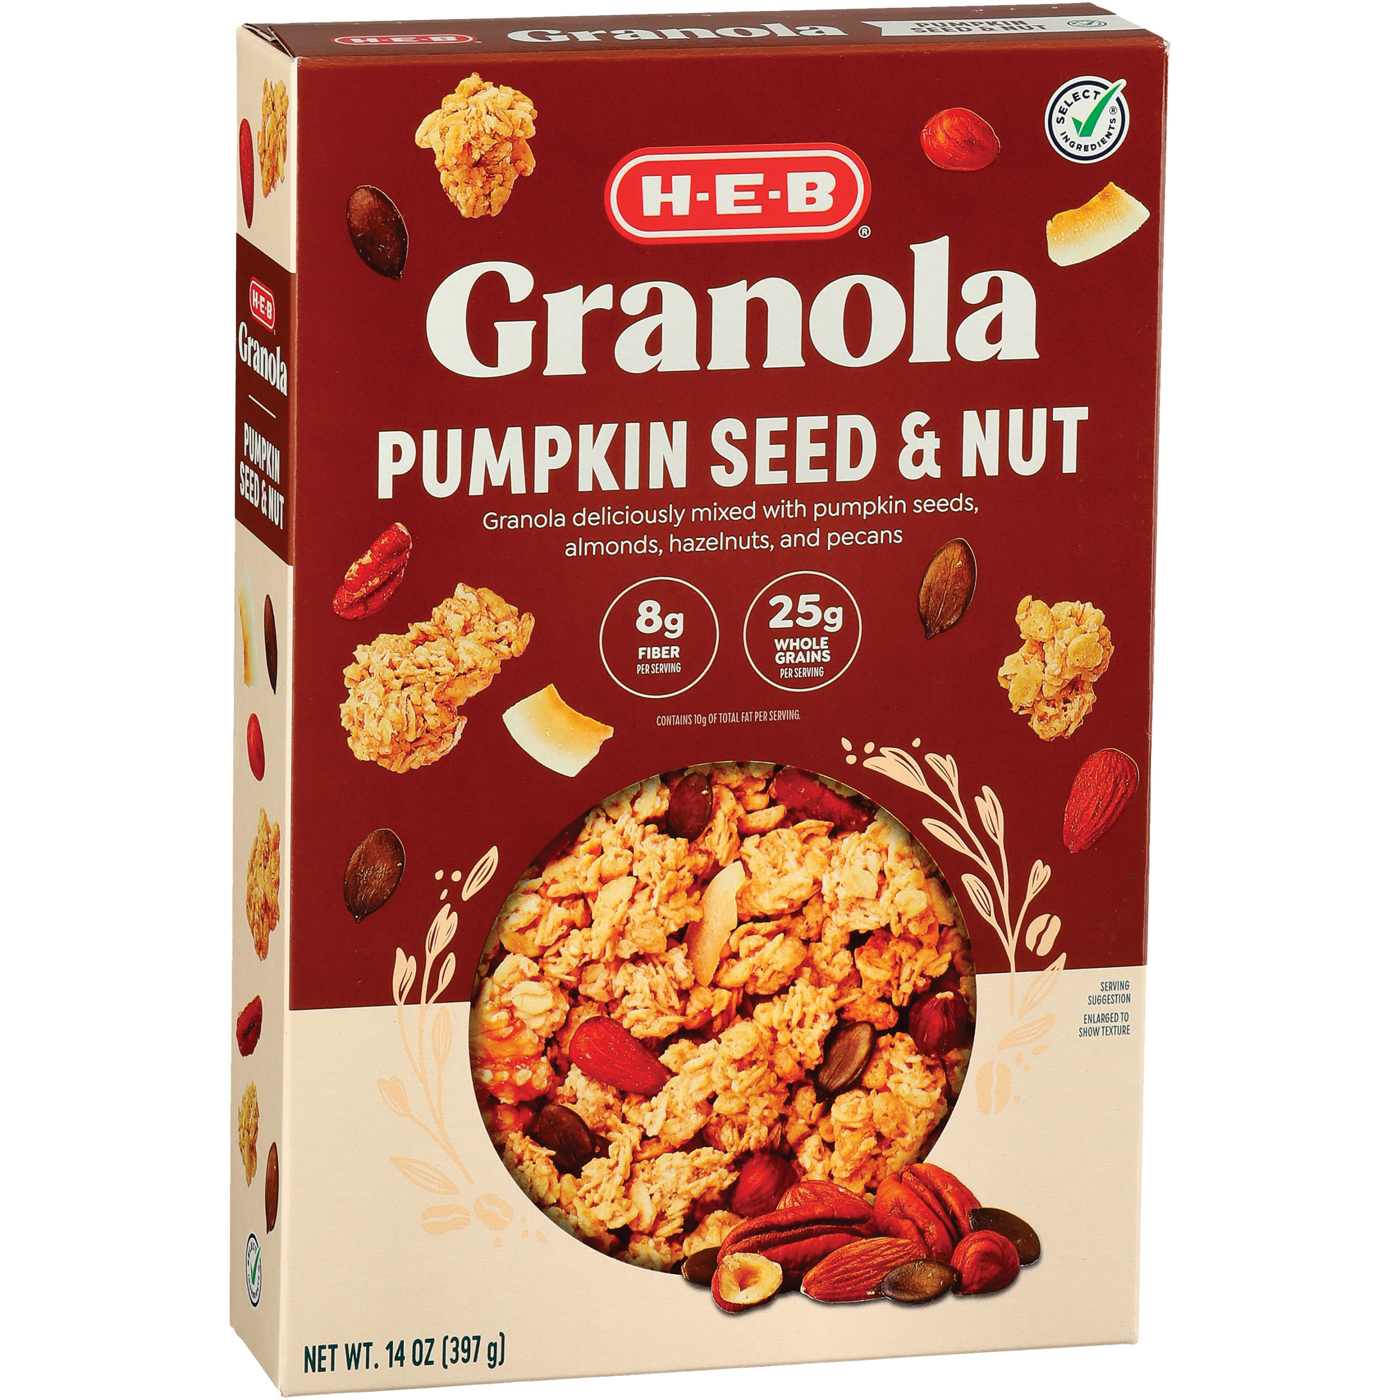 H-E-B Granola - Pumpkin Seed & Nut; image 2 of 2